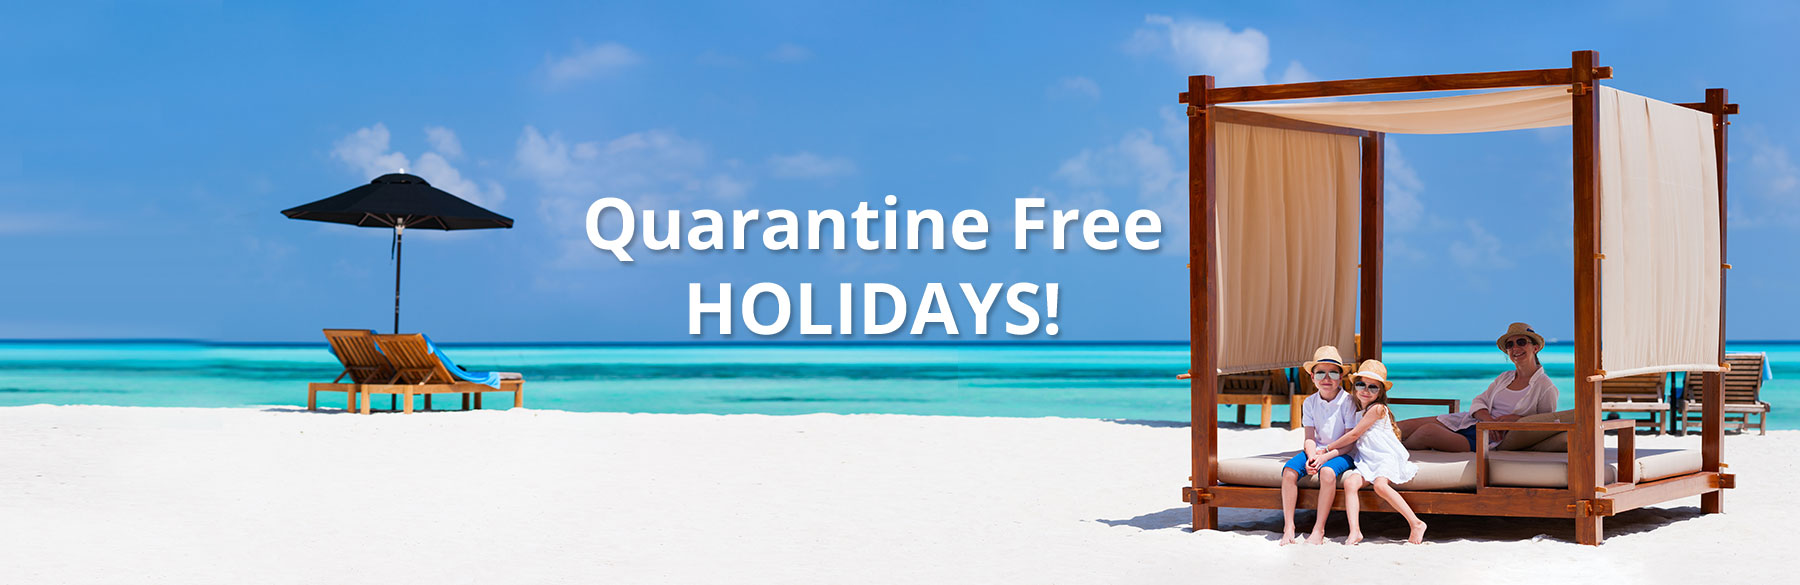 quarantine-free-holiday-destinations